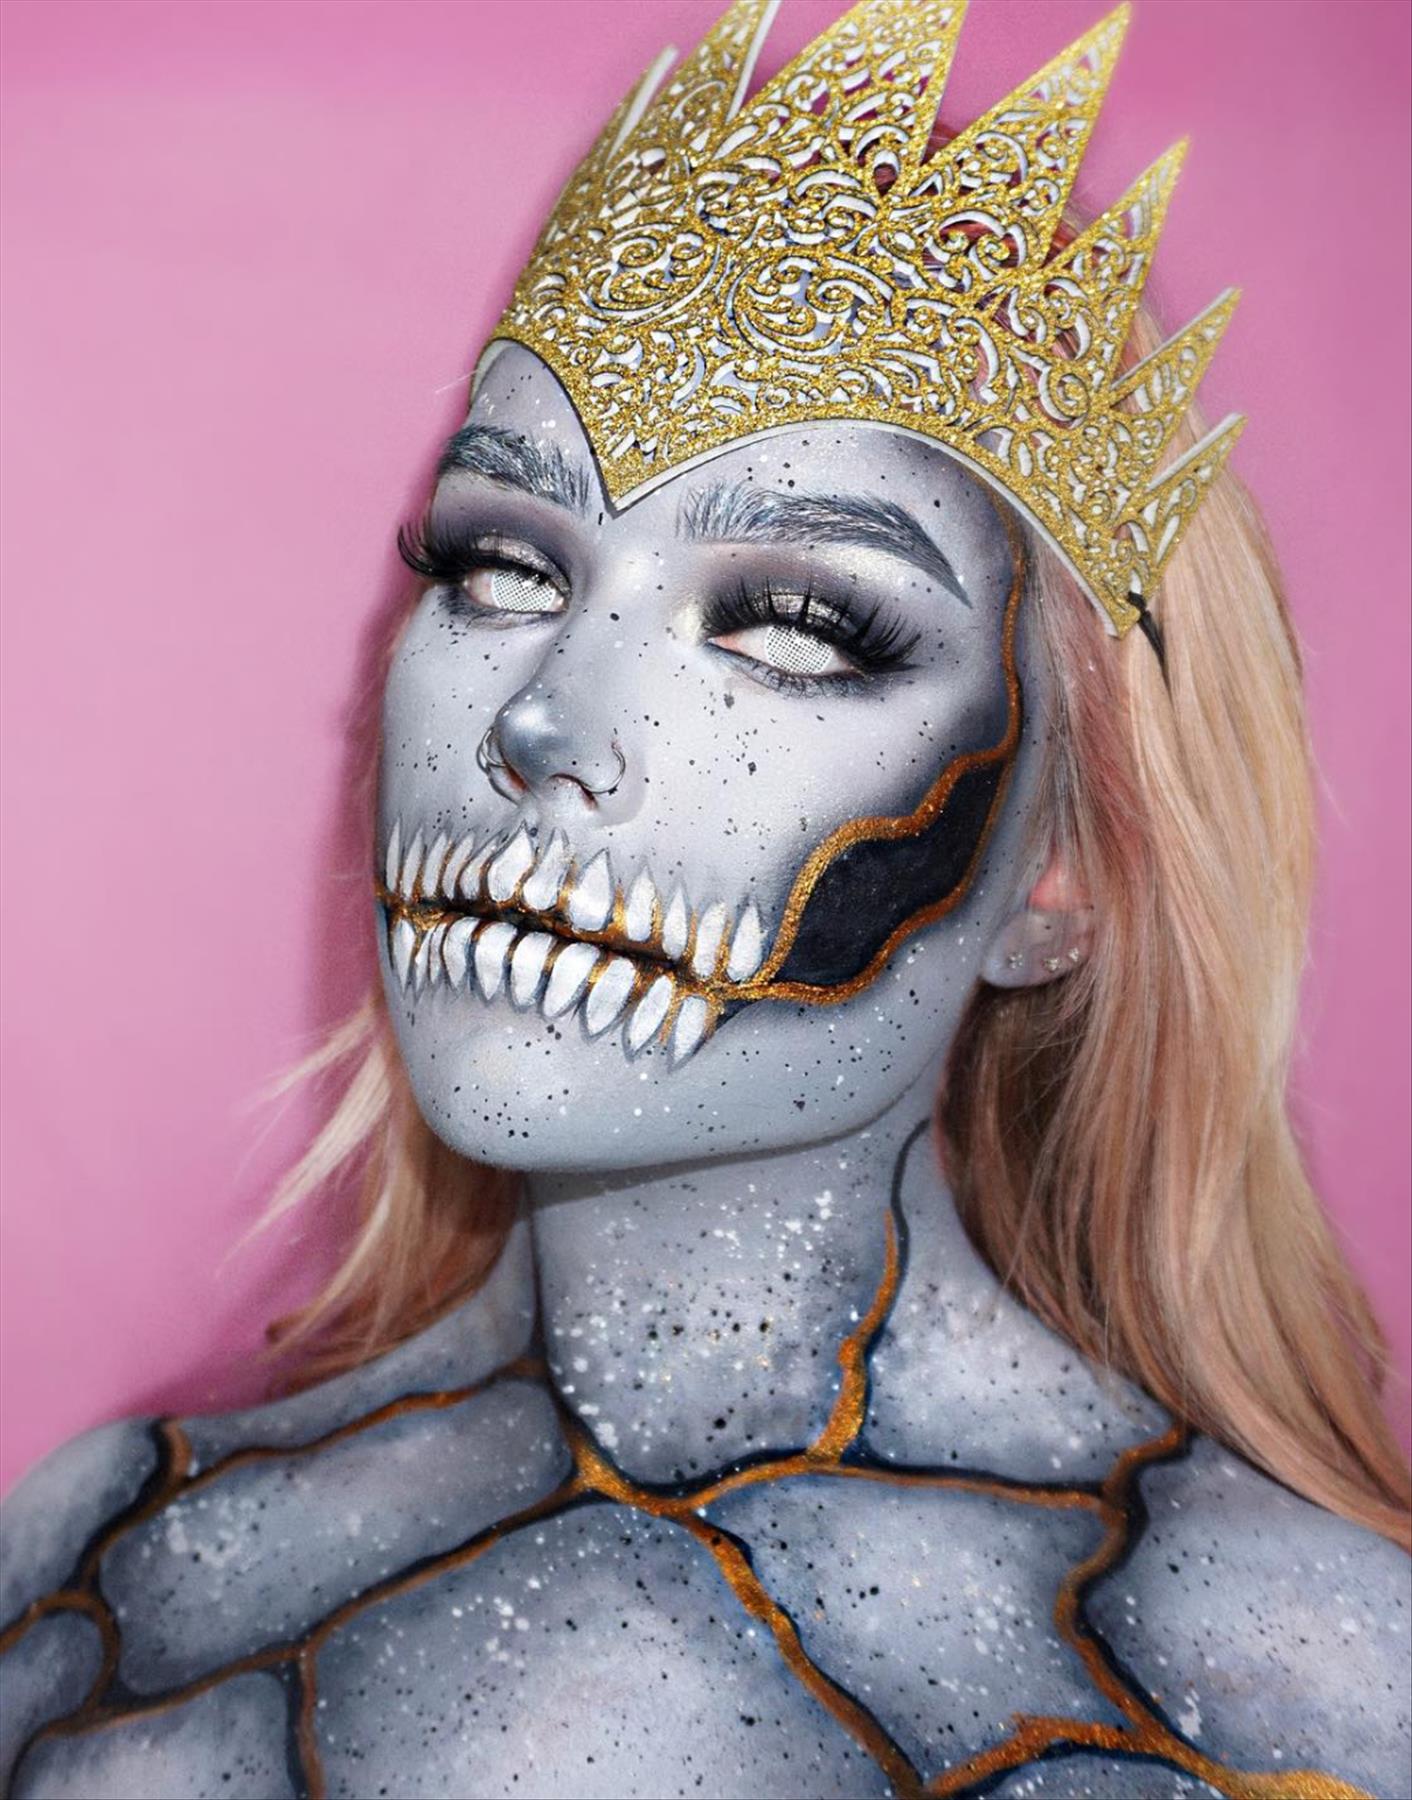 Cool Halloween makeup looks trending this year